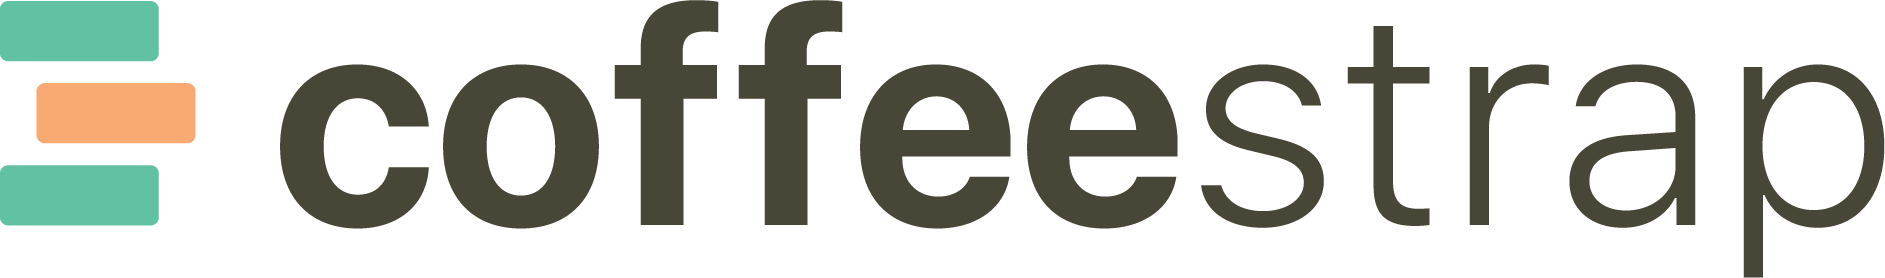 coffeestrap logo